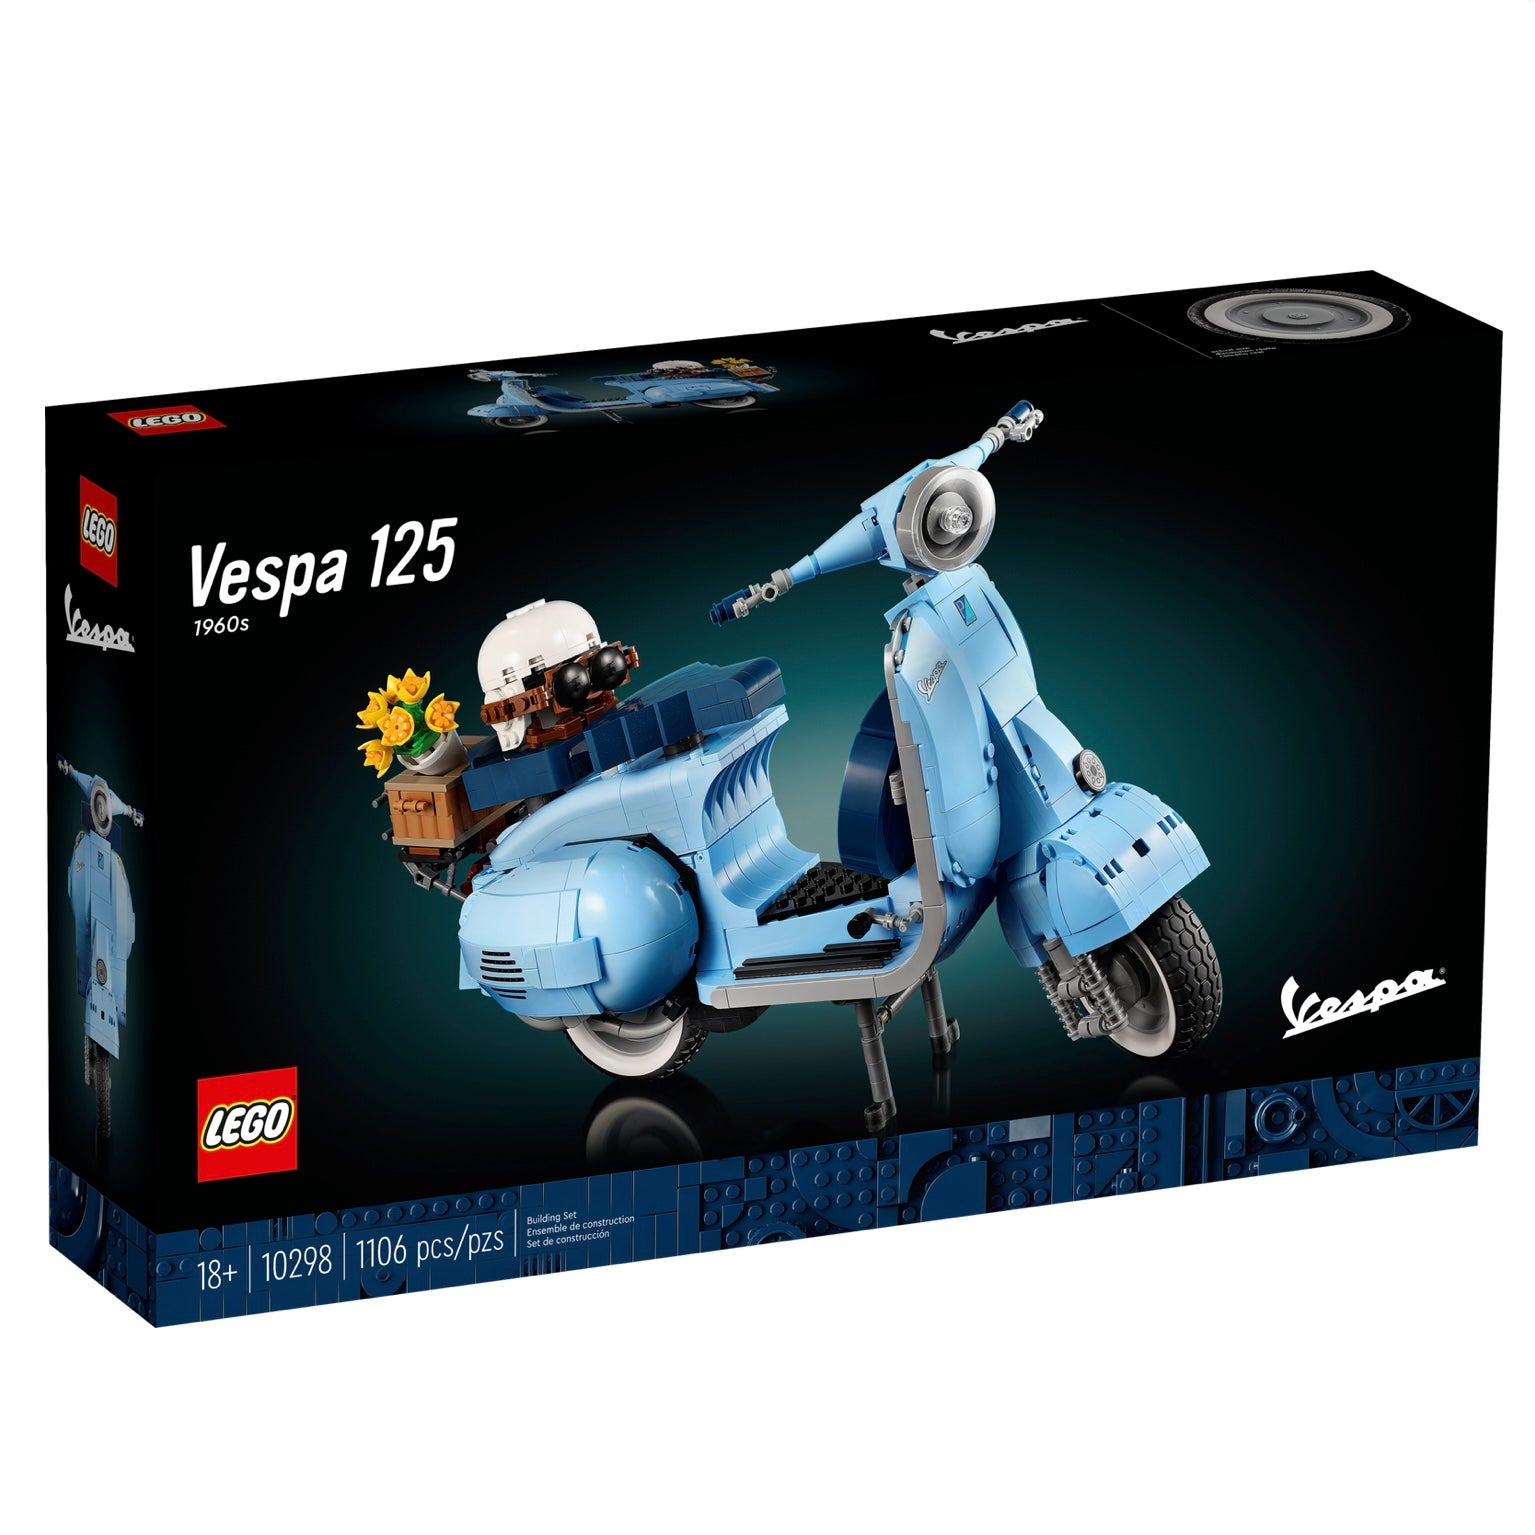 10298 LEGO Vespa 125